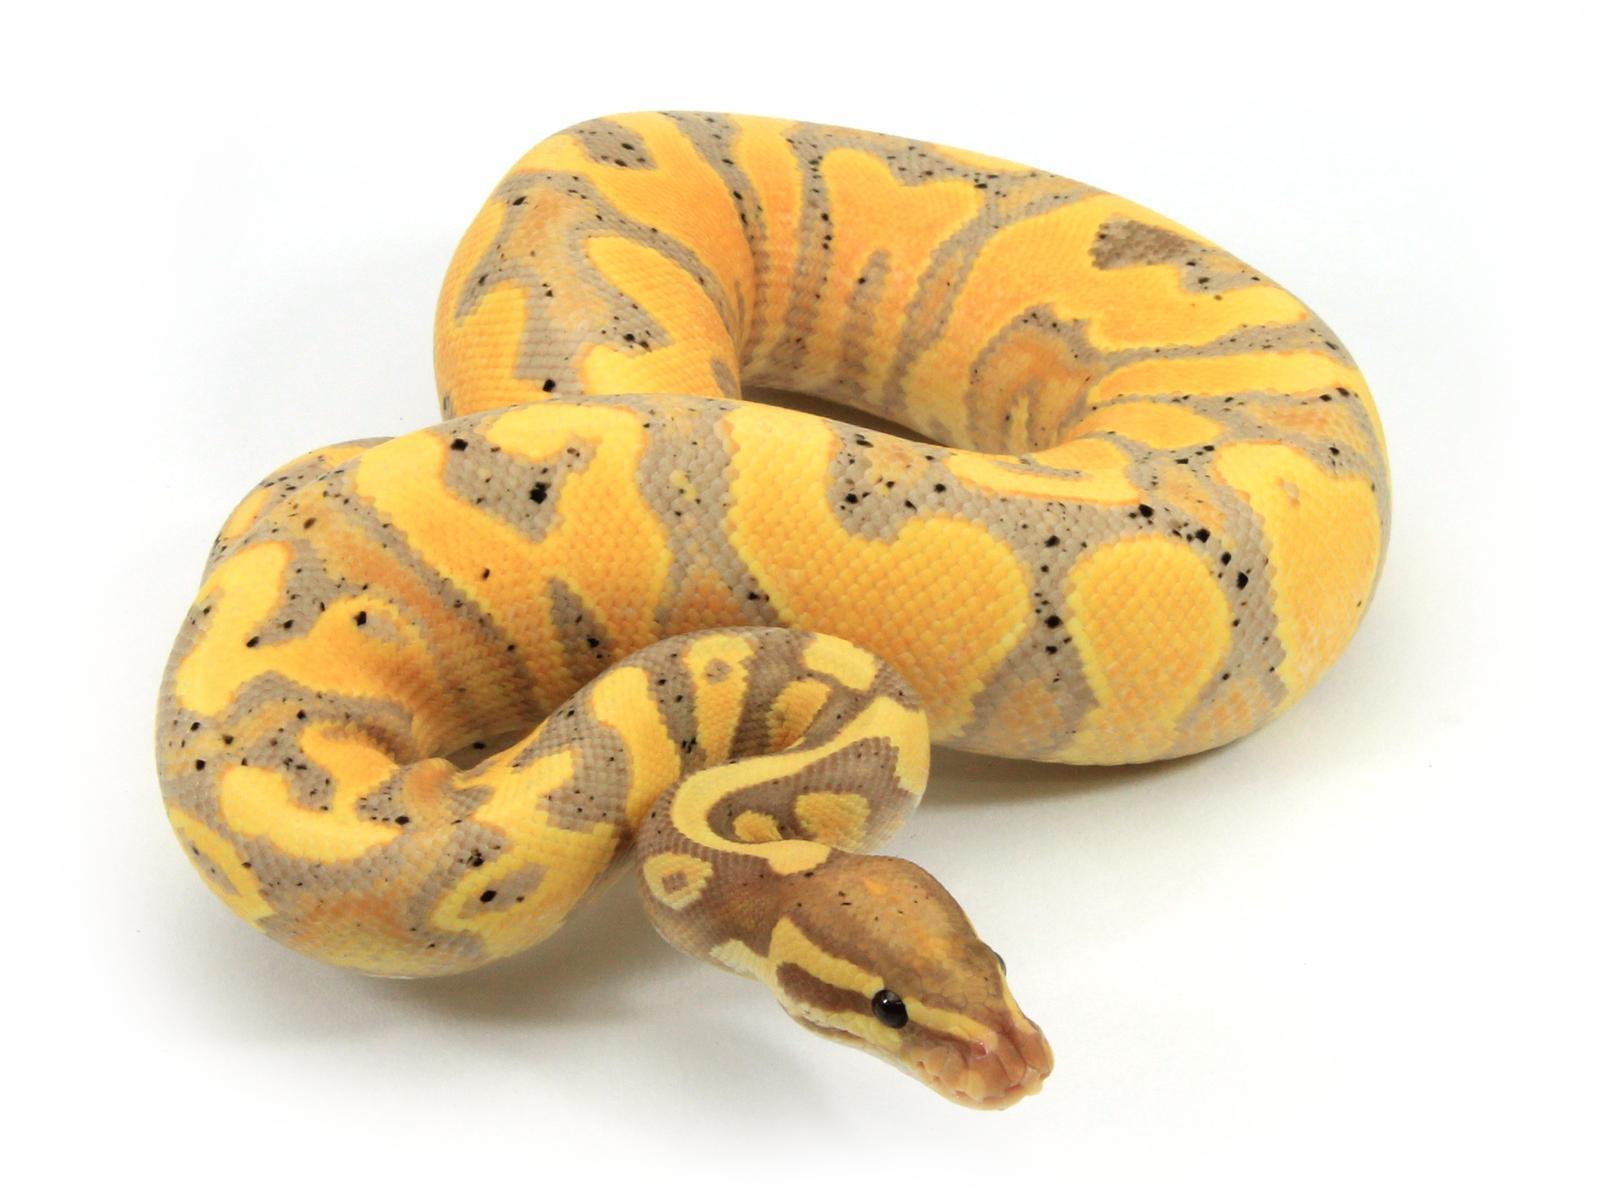 Appearance of banana python snake